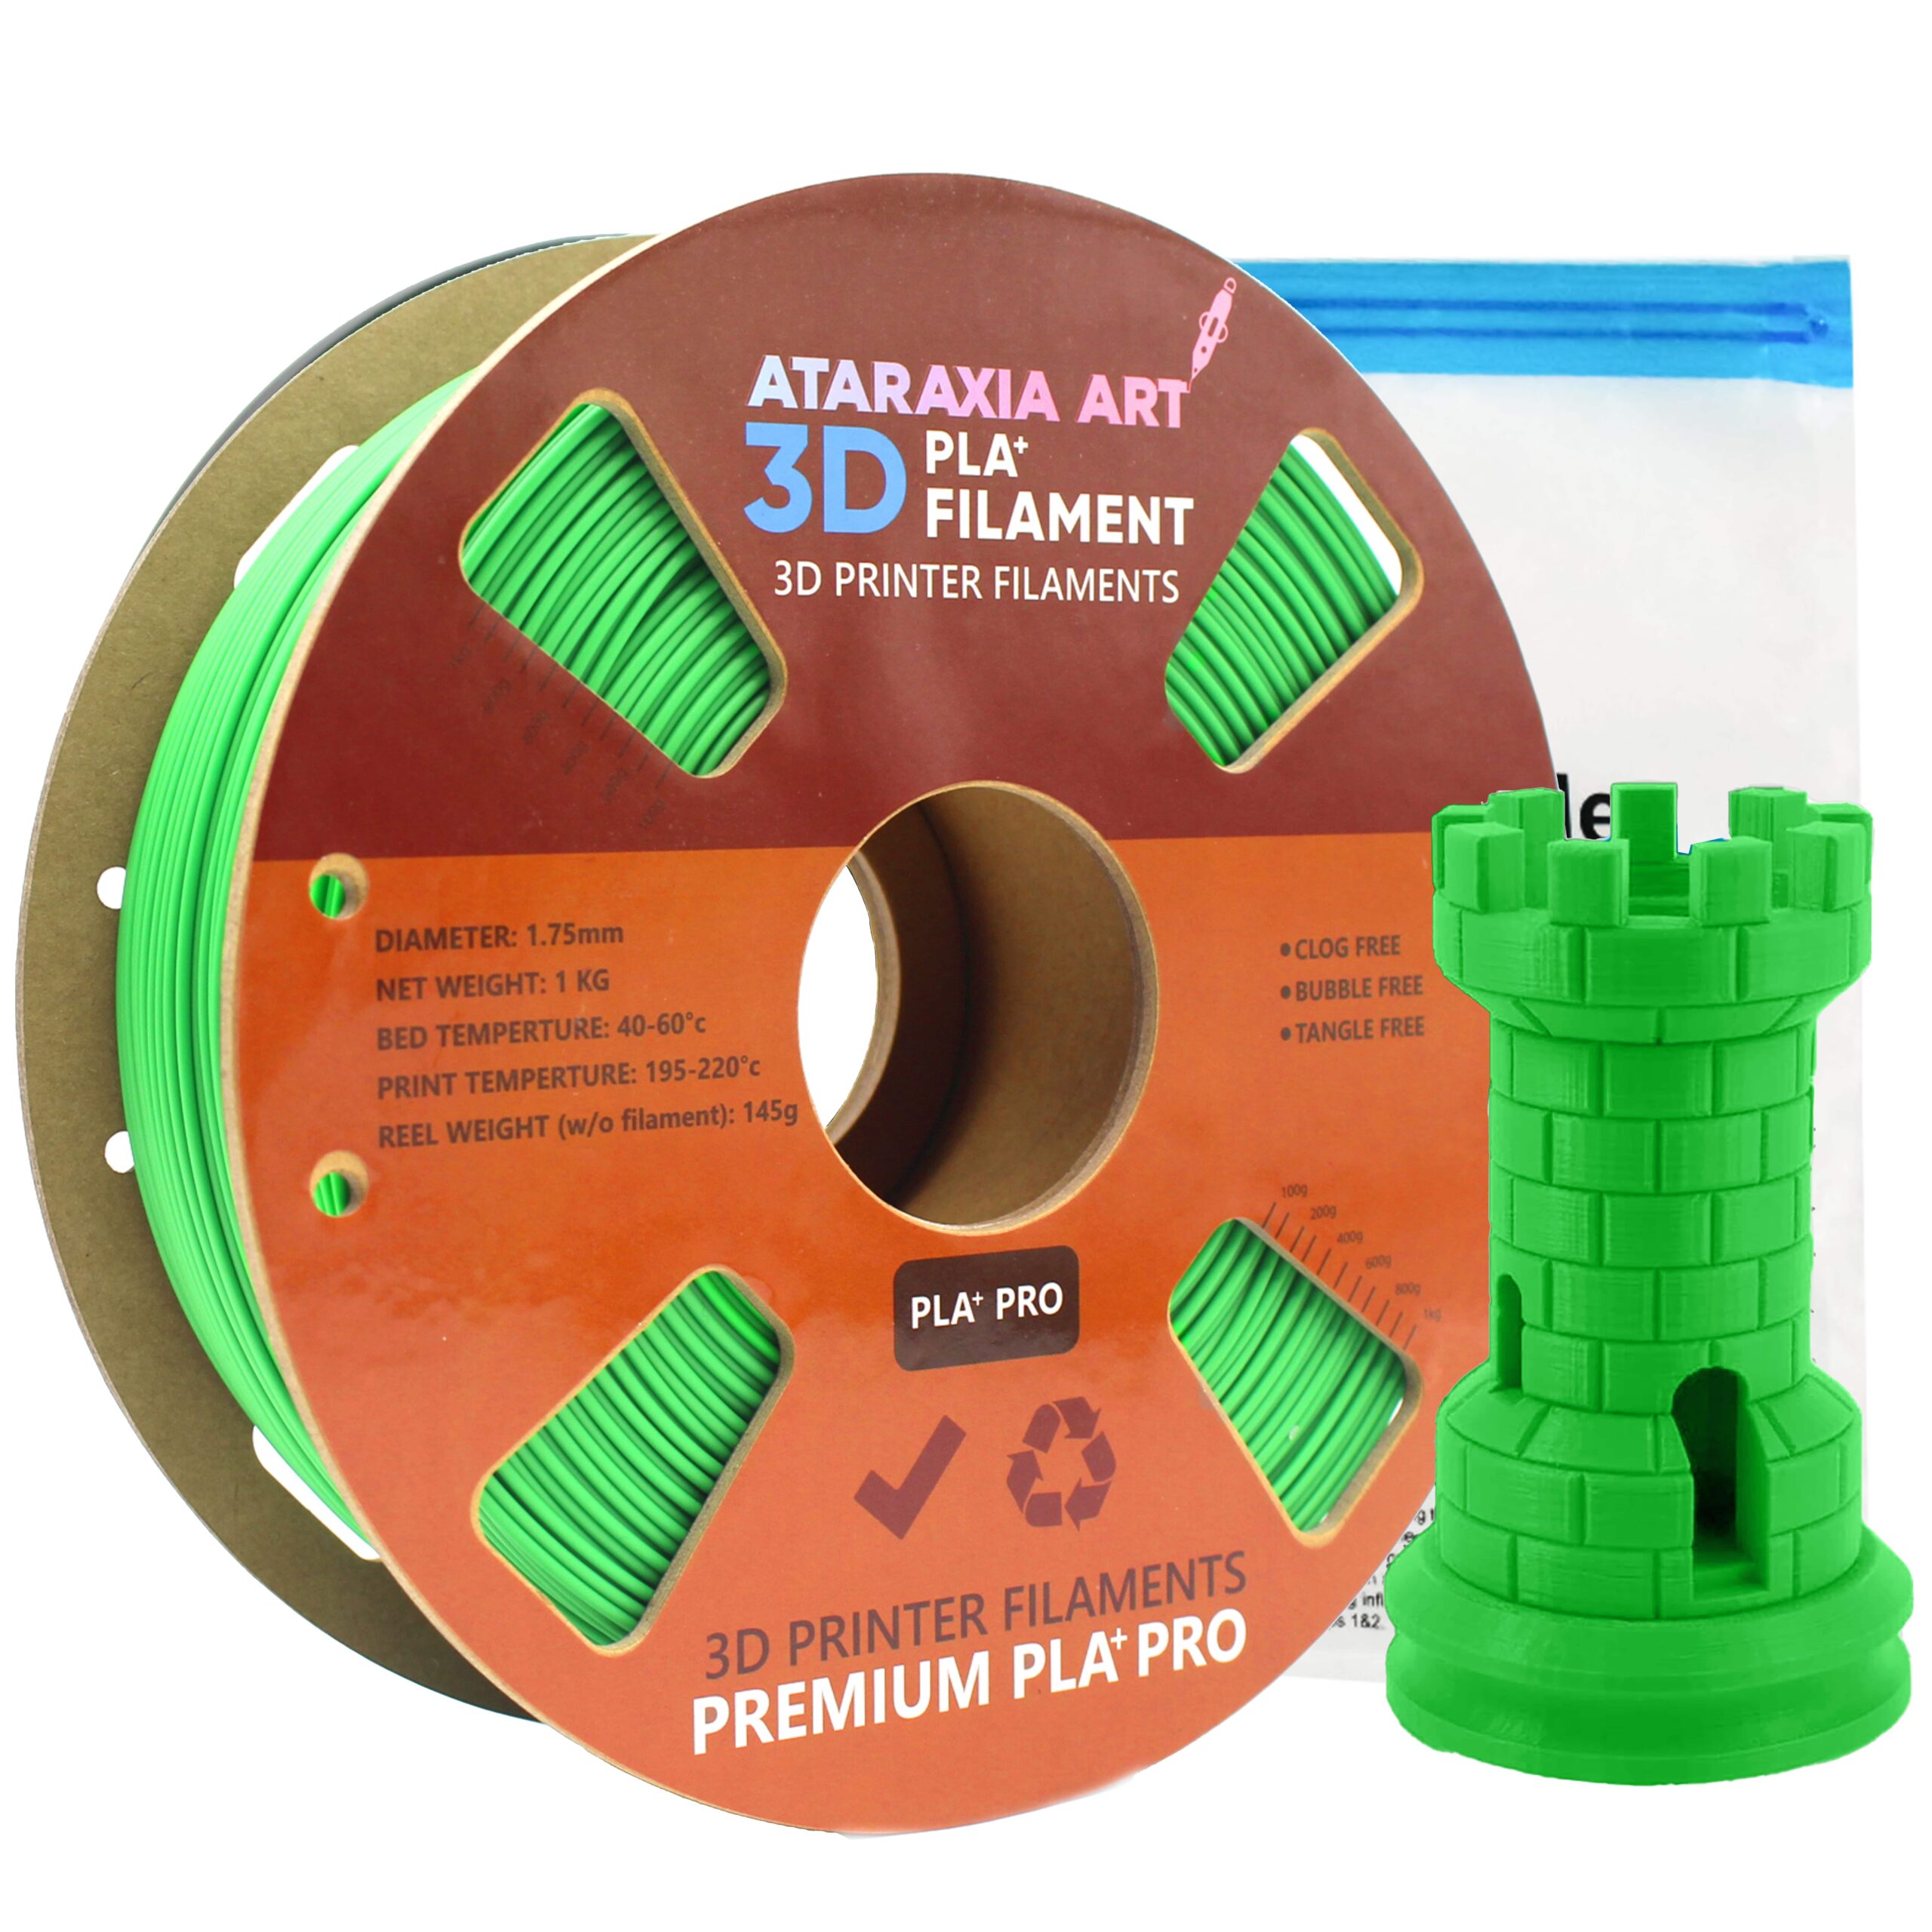 ATARAXIA ART PLA Plus Filament 1.75mm, Neat Winding, 3D Printer